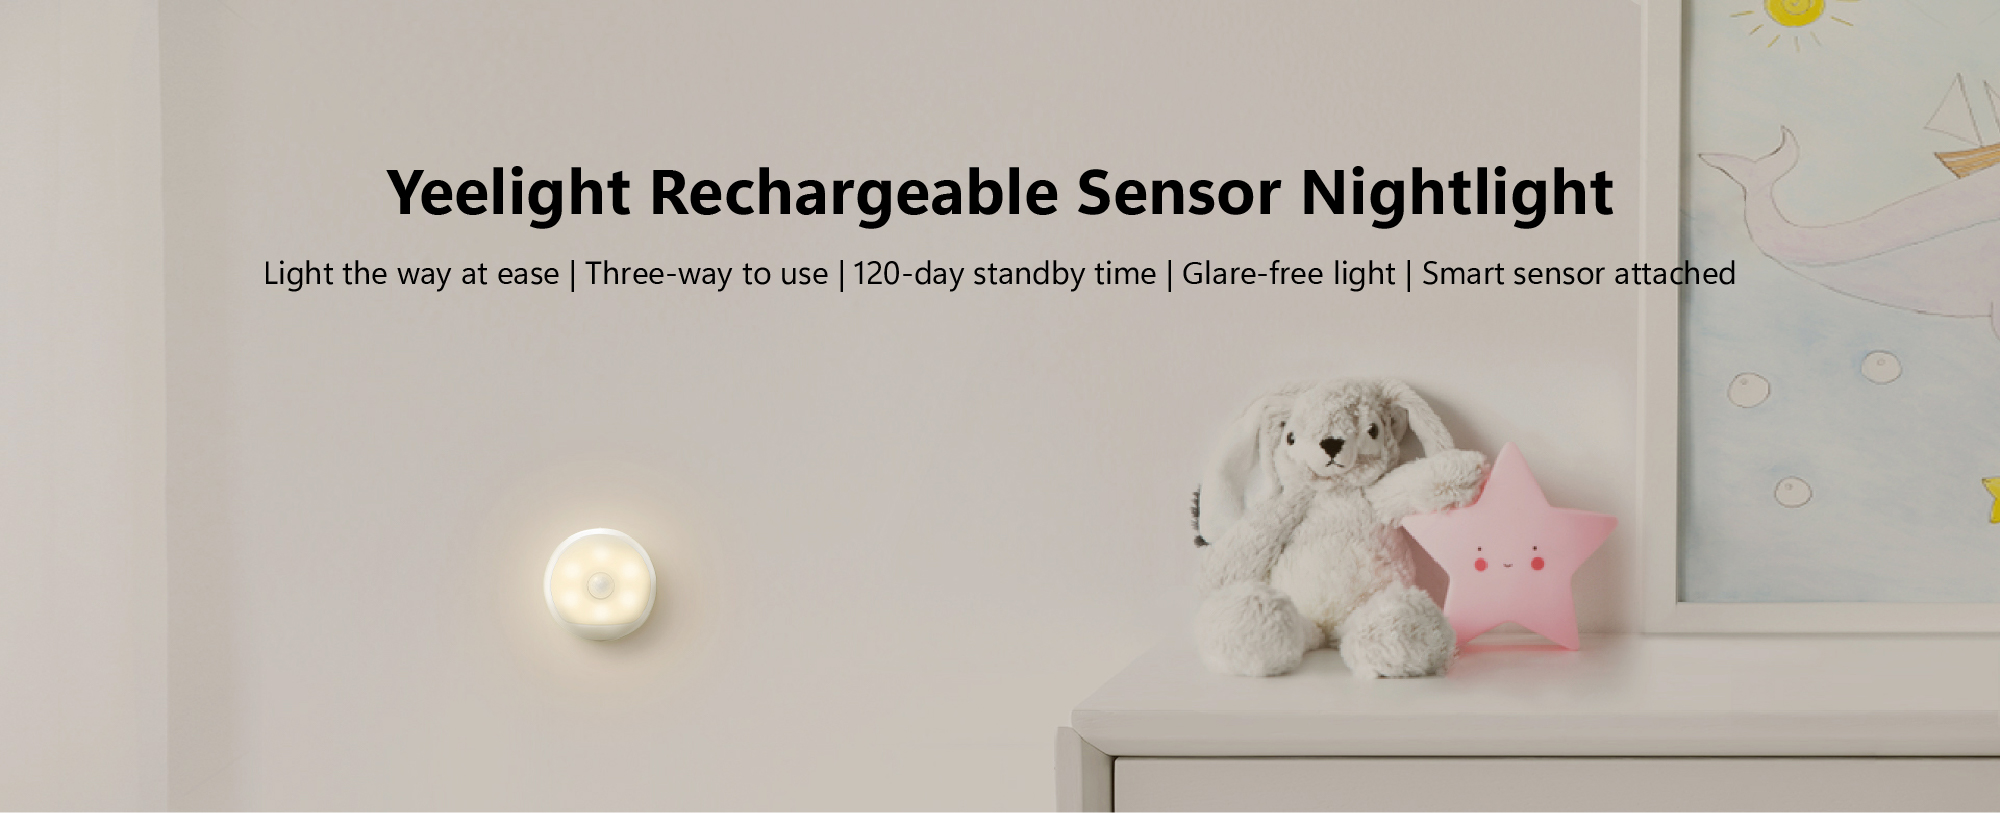 Yeelight Rechargeable Sensor Nightlight